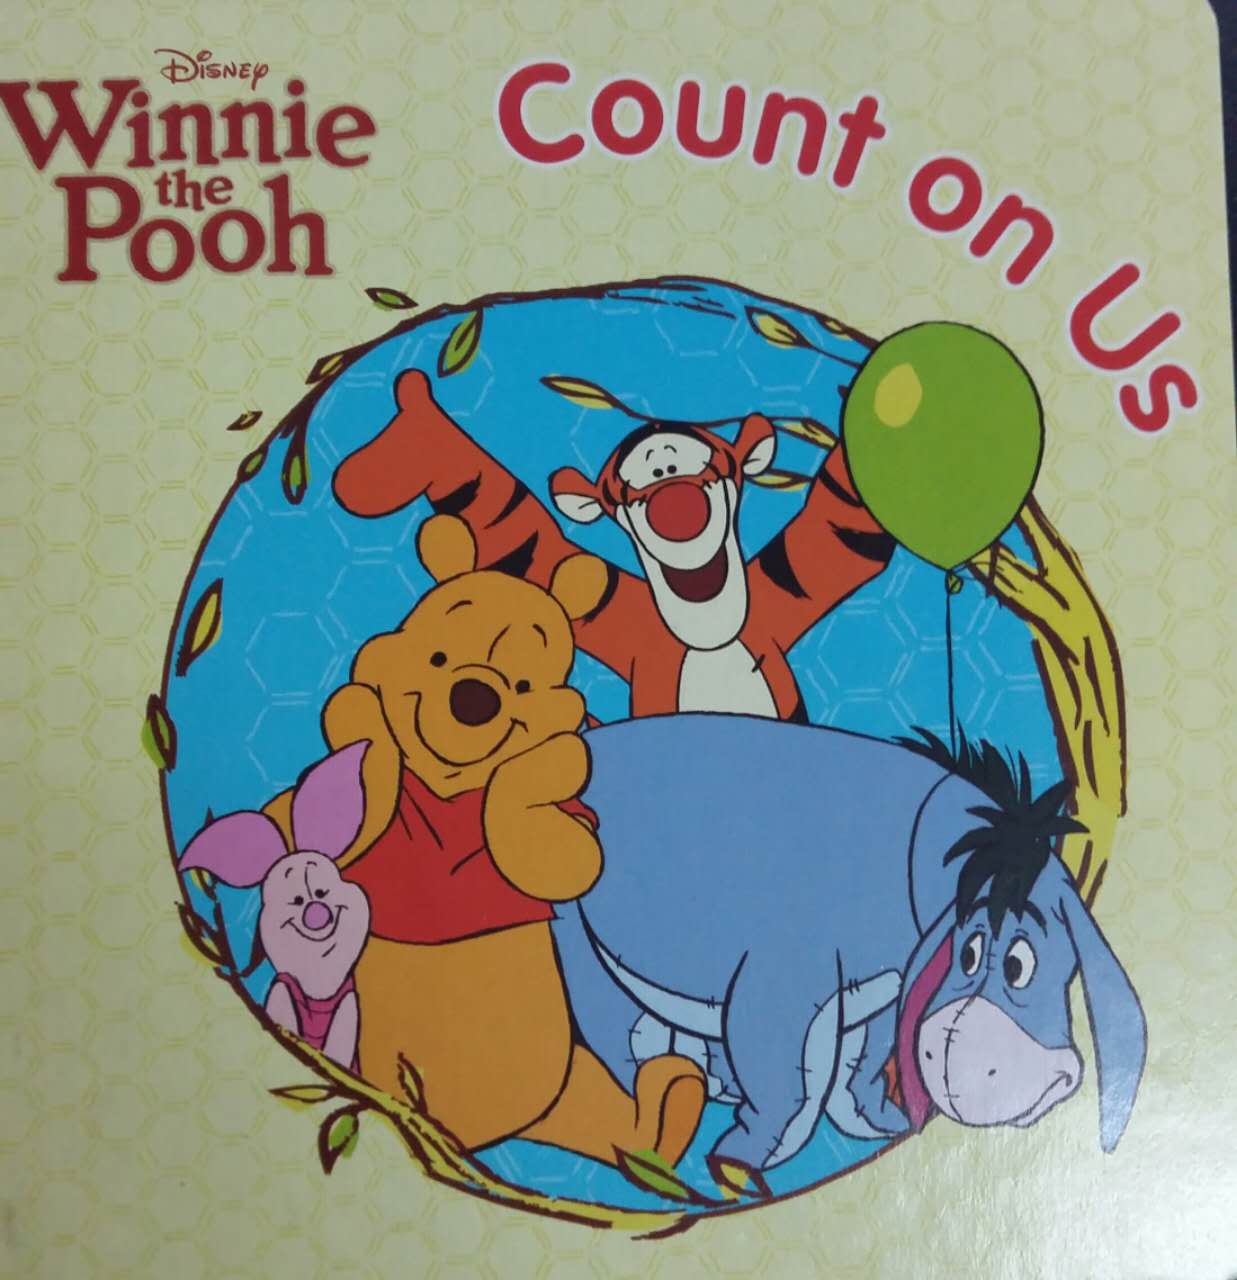 Winnie the Pooh：Count On Us